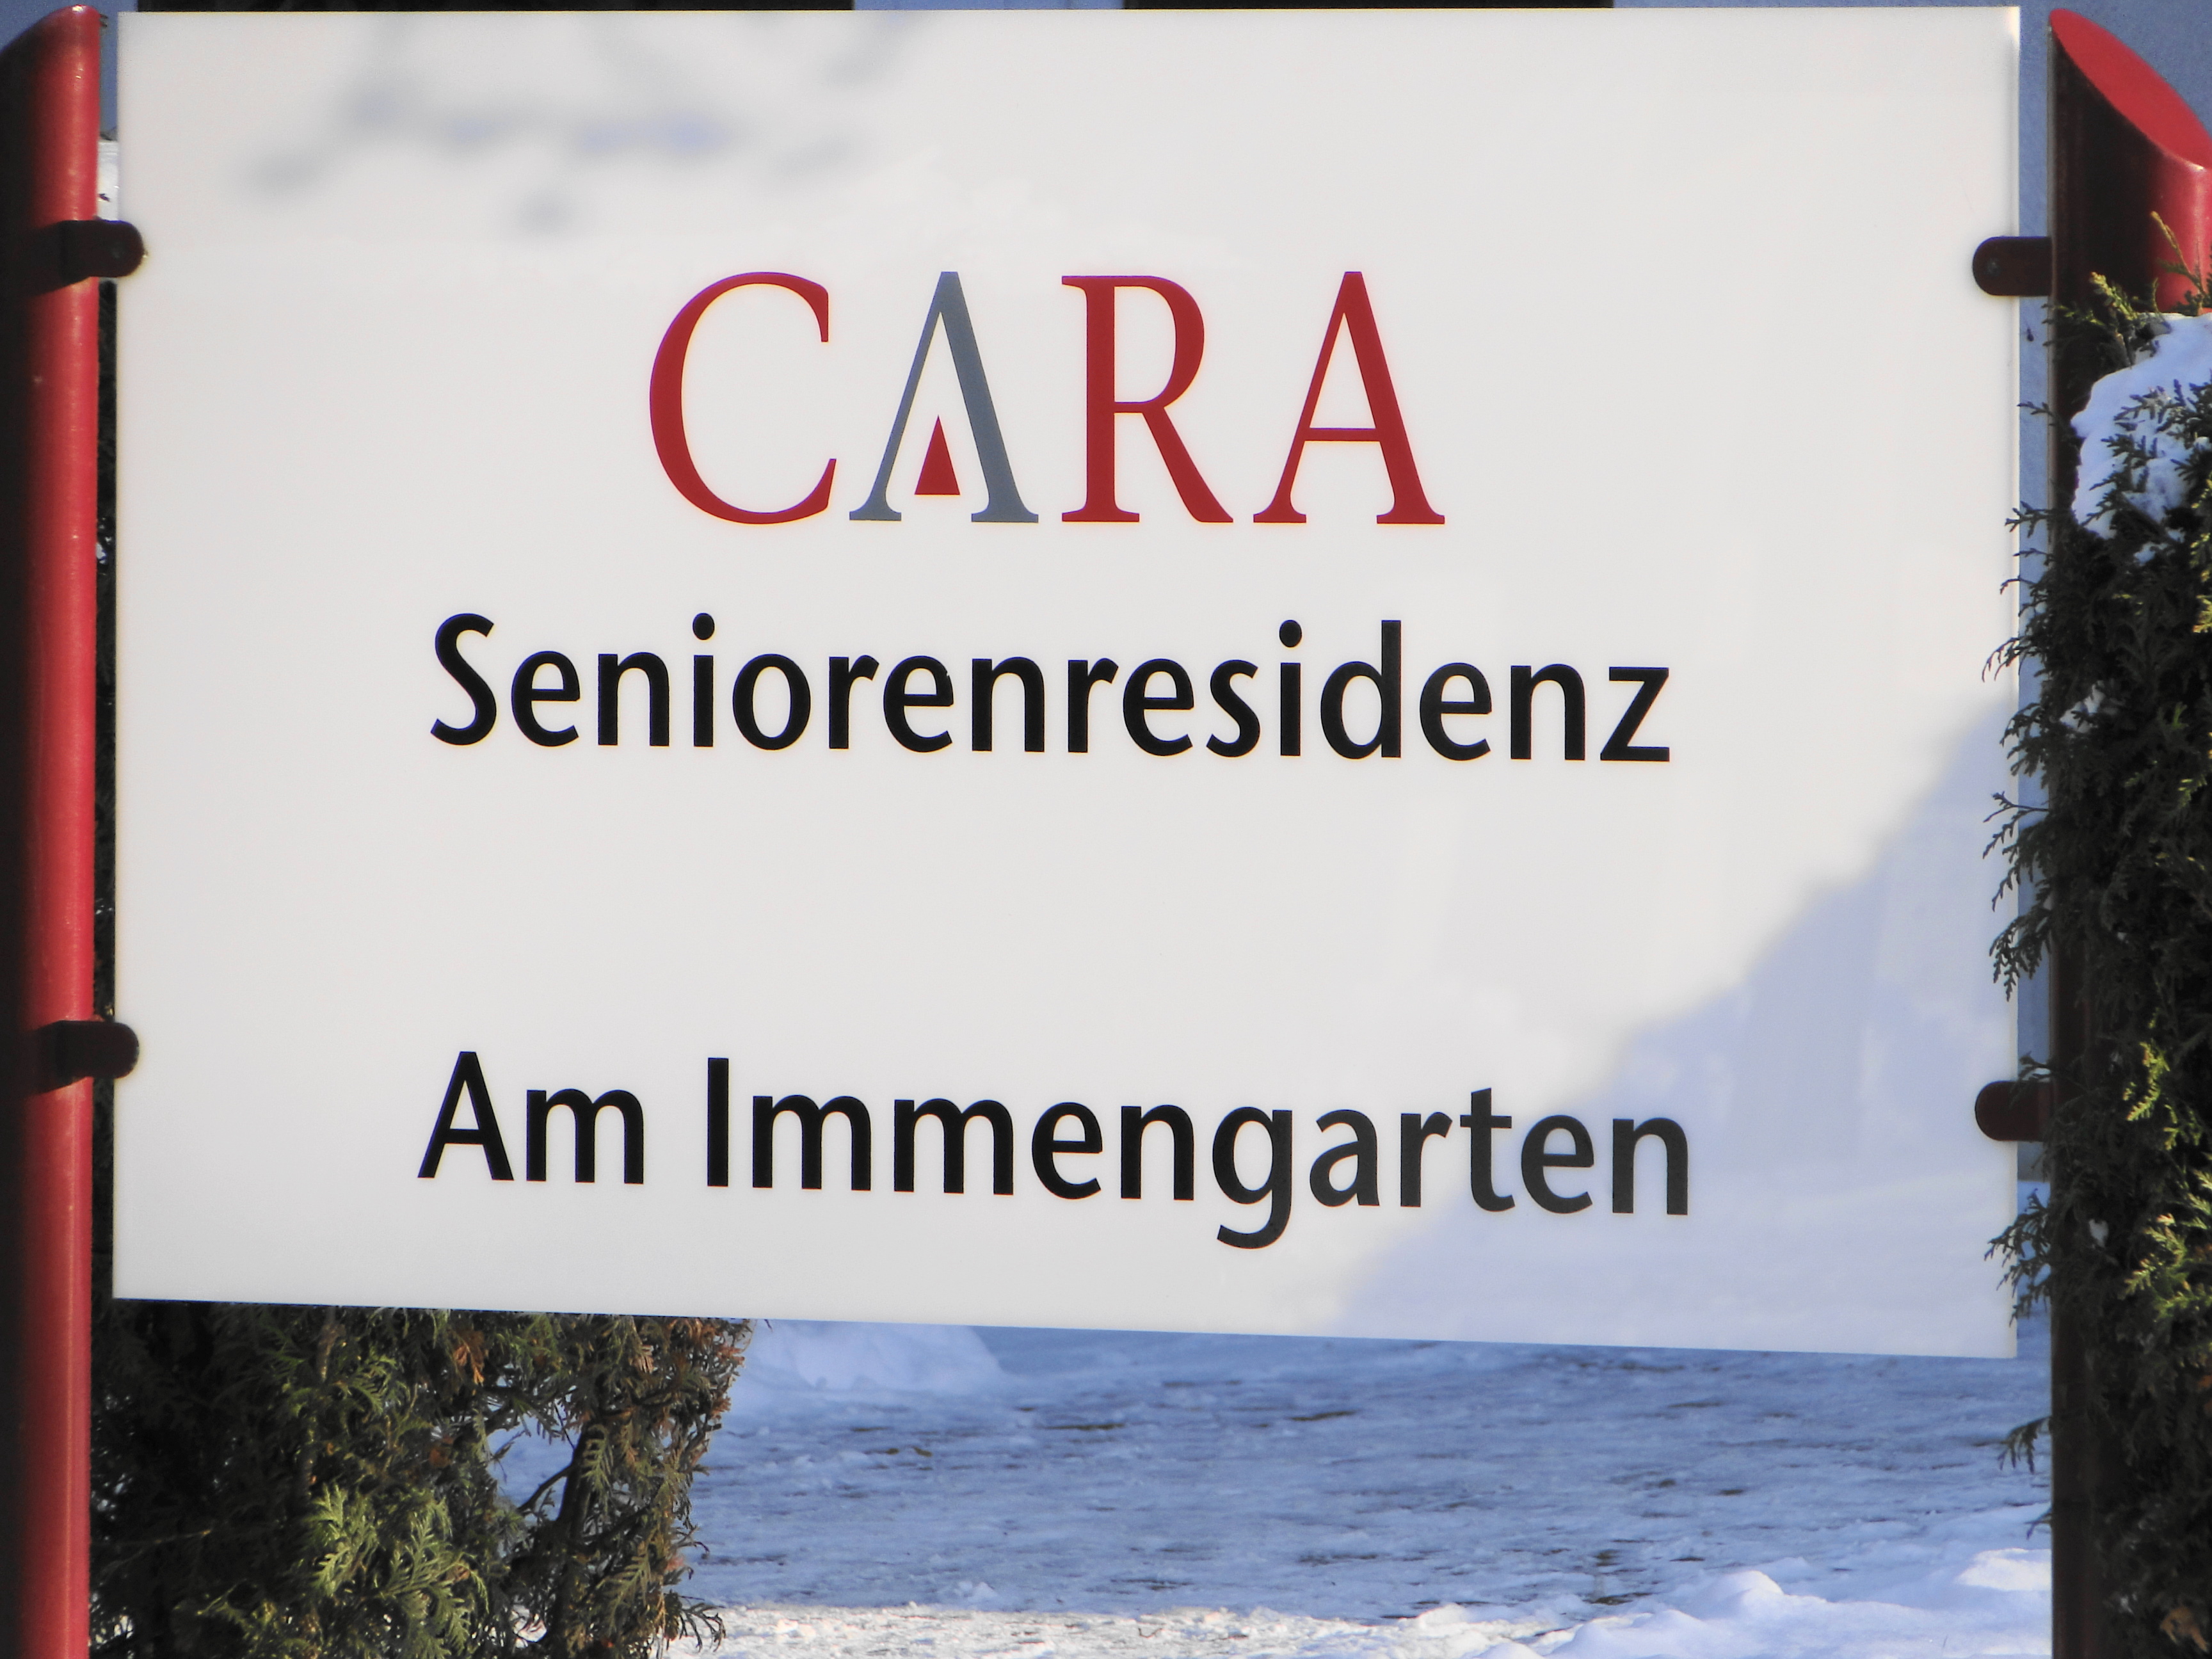 CARA Seniorenresidenz, Am Immengarten